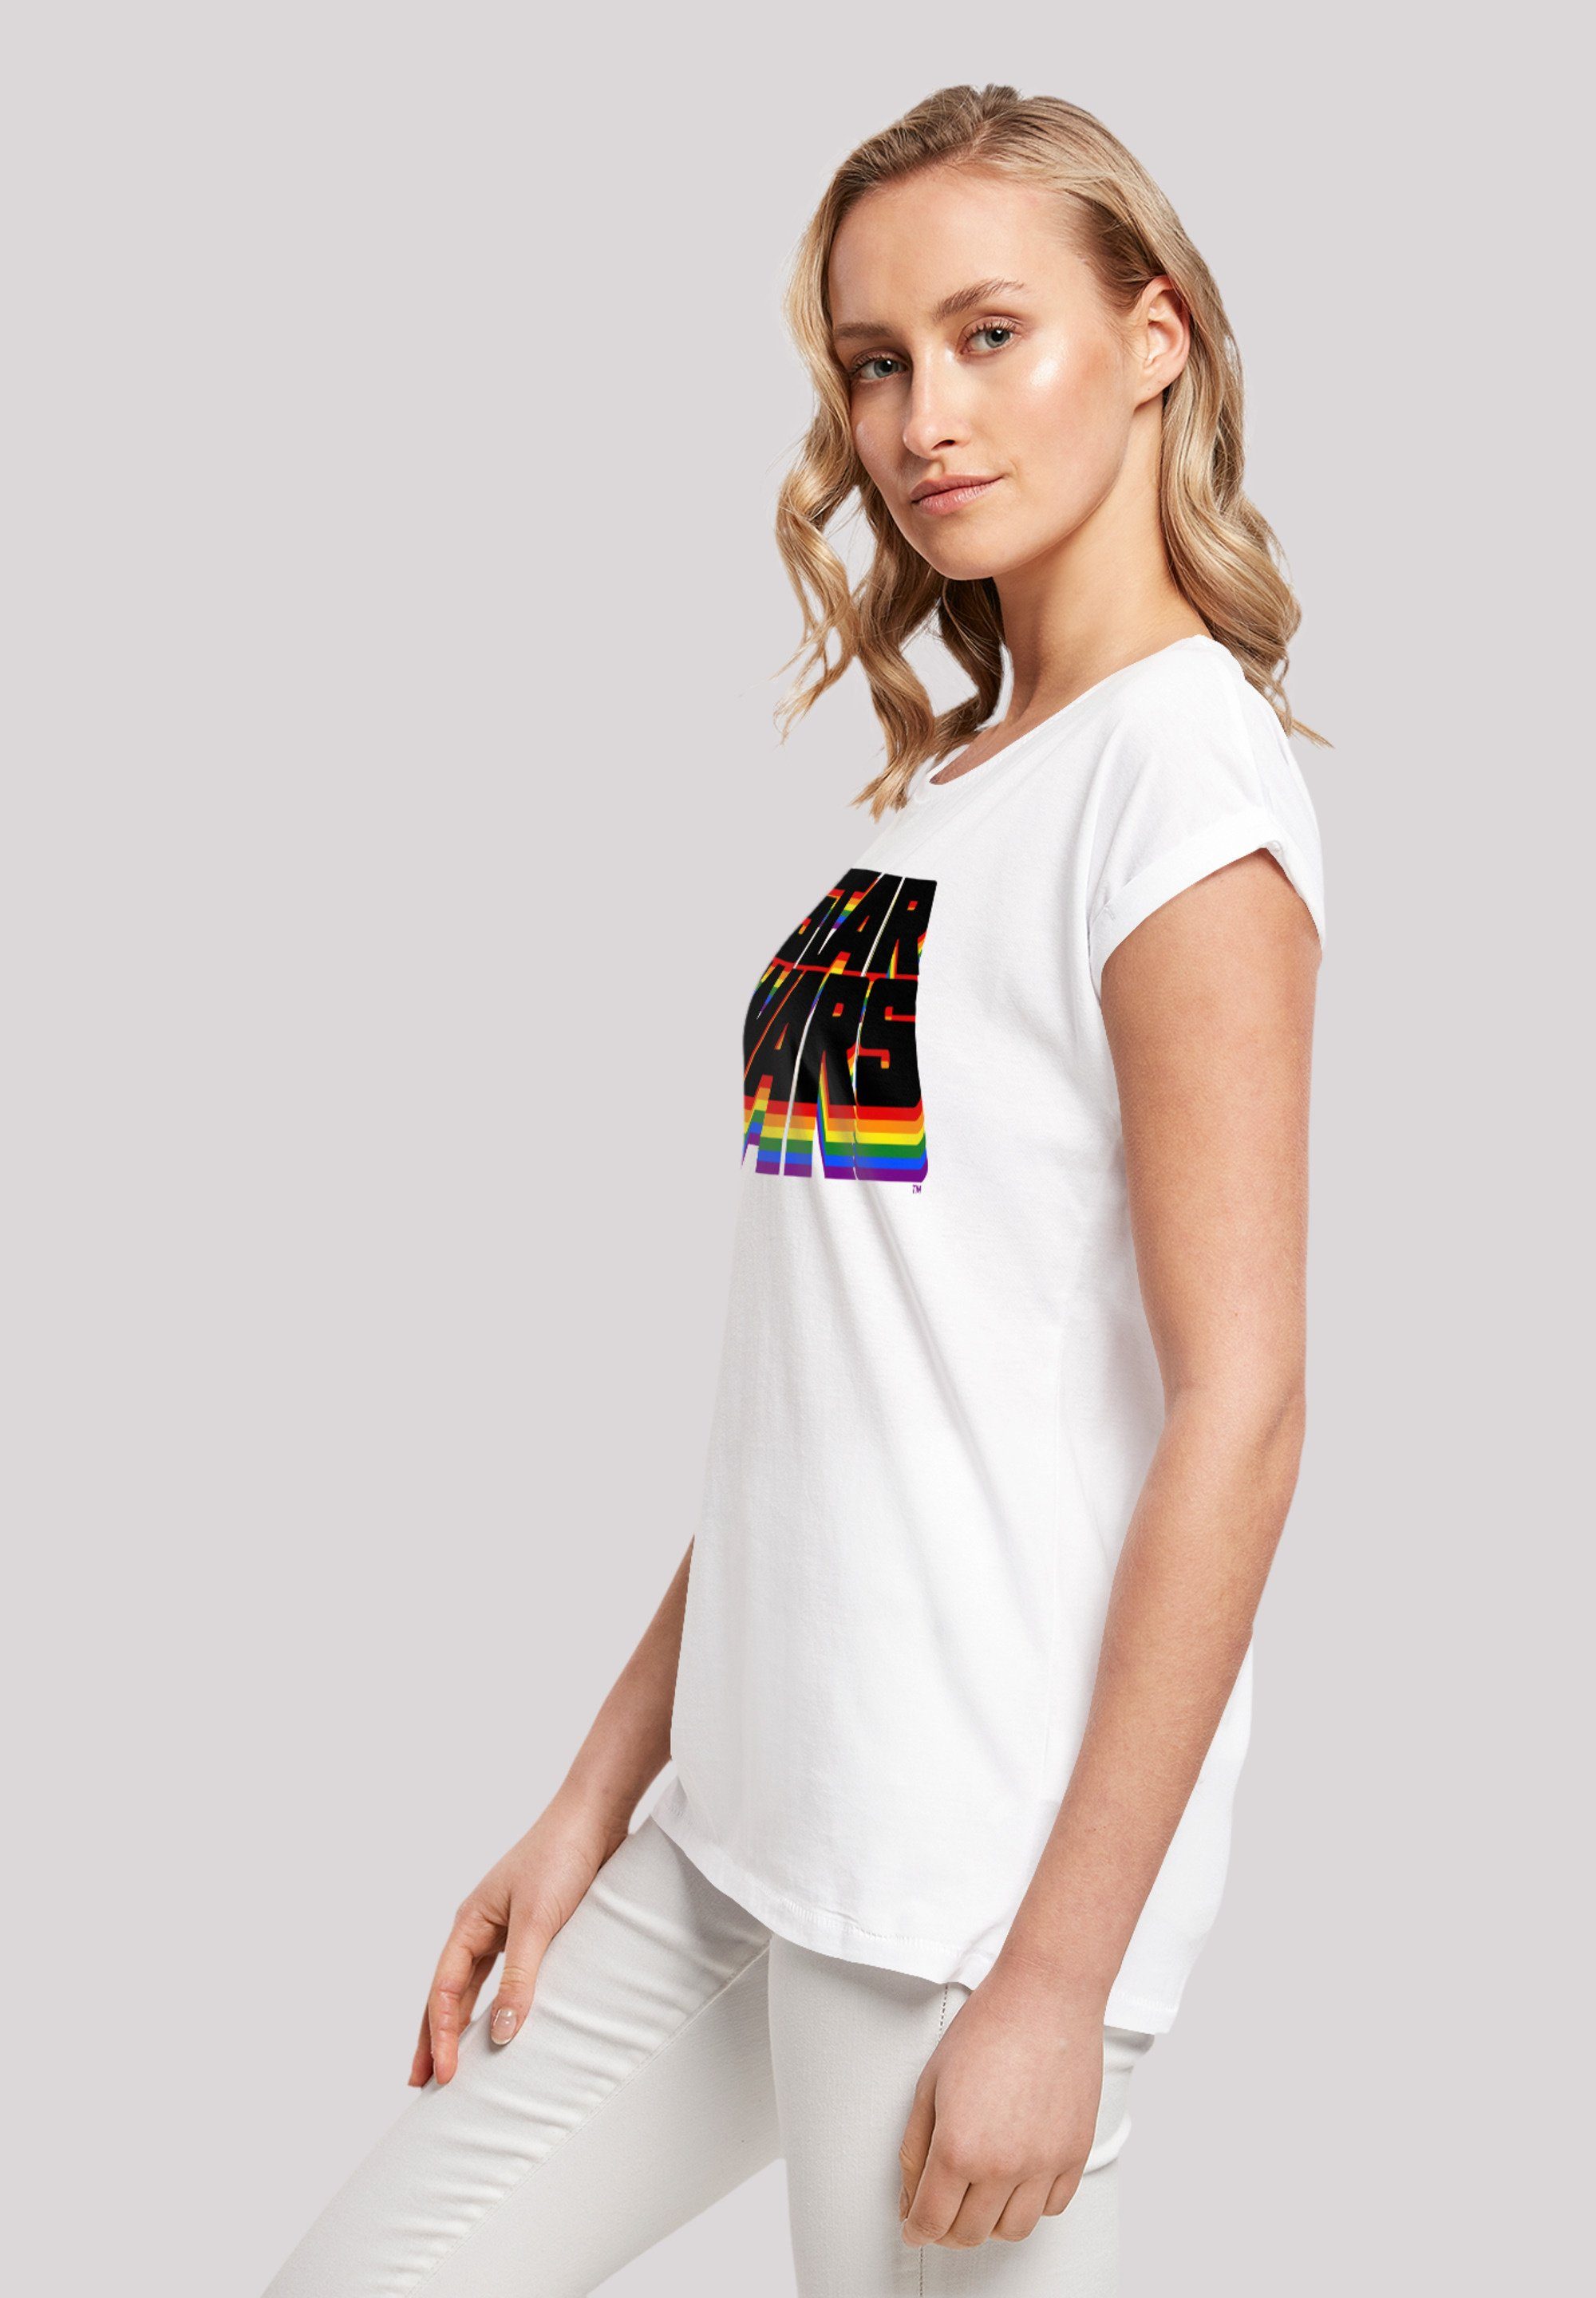 F4NT4STIC T-Shirt Premium Pride Vintage Wars Qualität Star